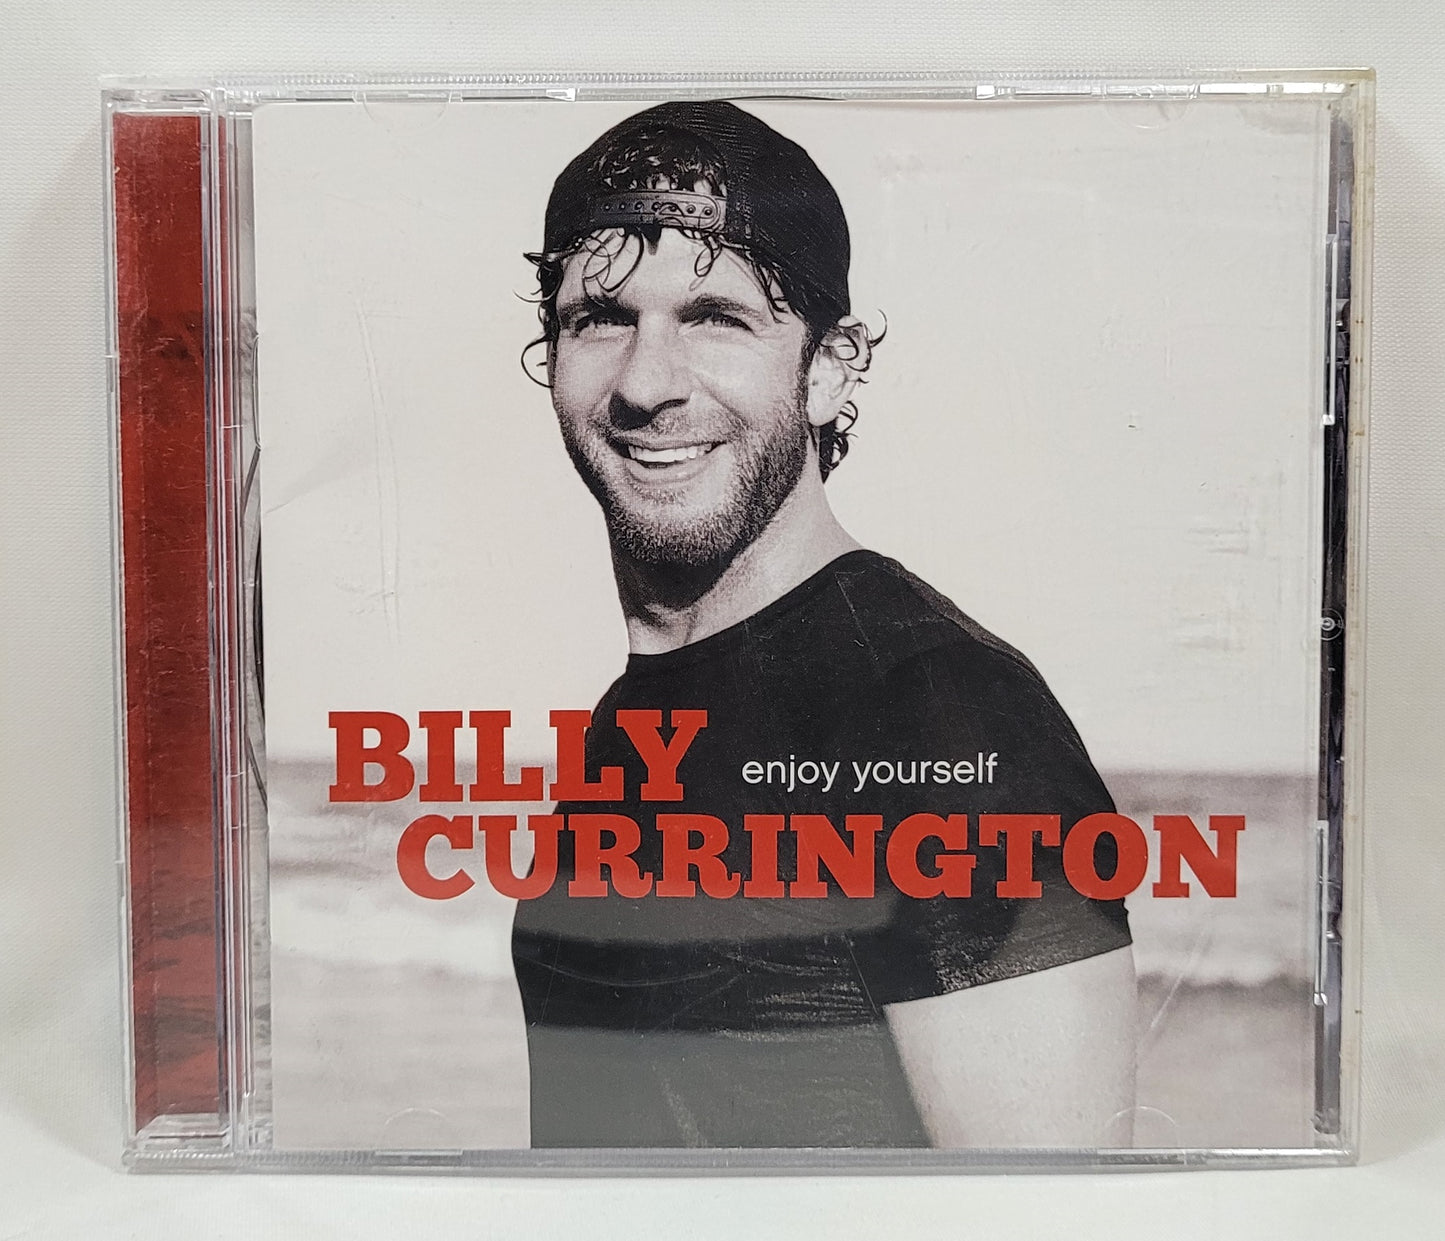 Billy Currington - Enjoy Yourself [2010 Used CD]